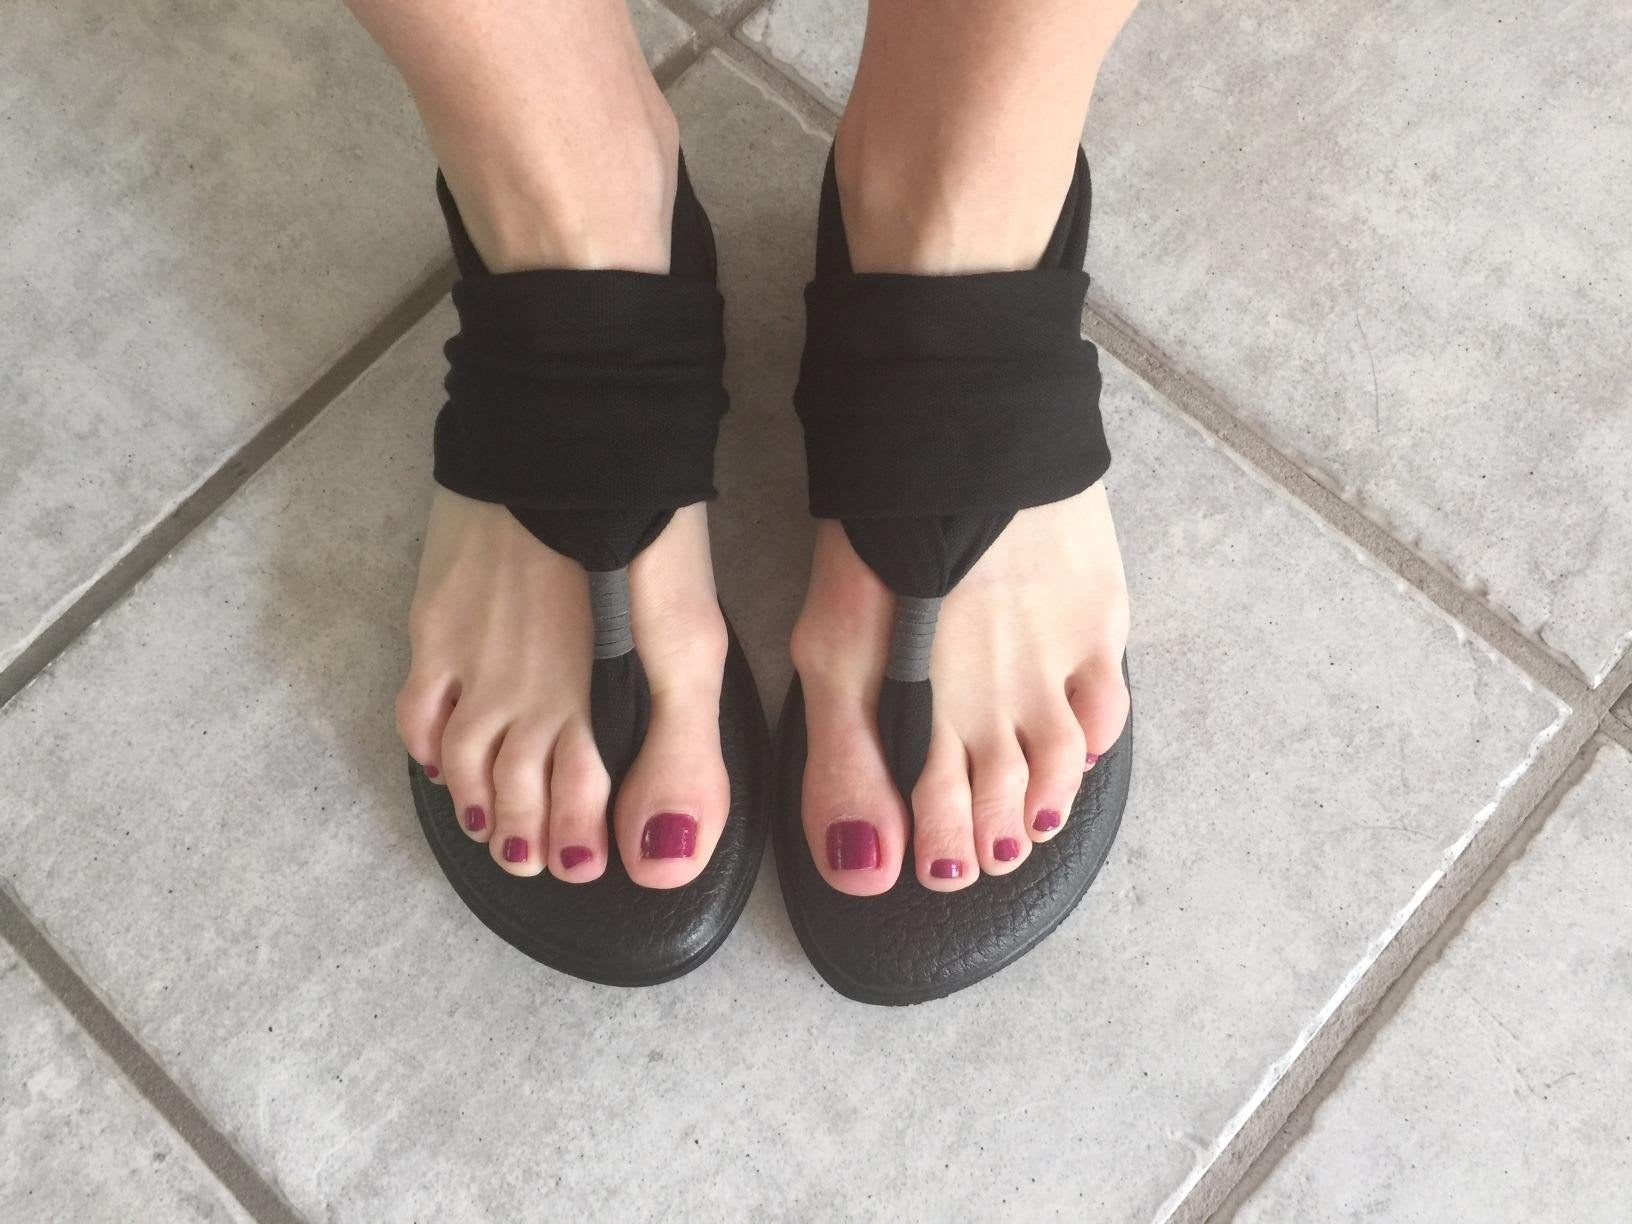 Sanuk Women's Yoga Sling 3  Sound Feet Shoes: Your Favorite Shoe